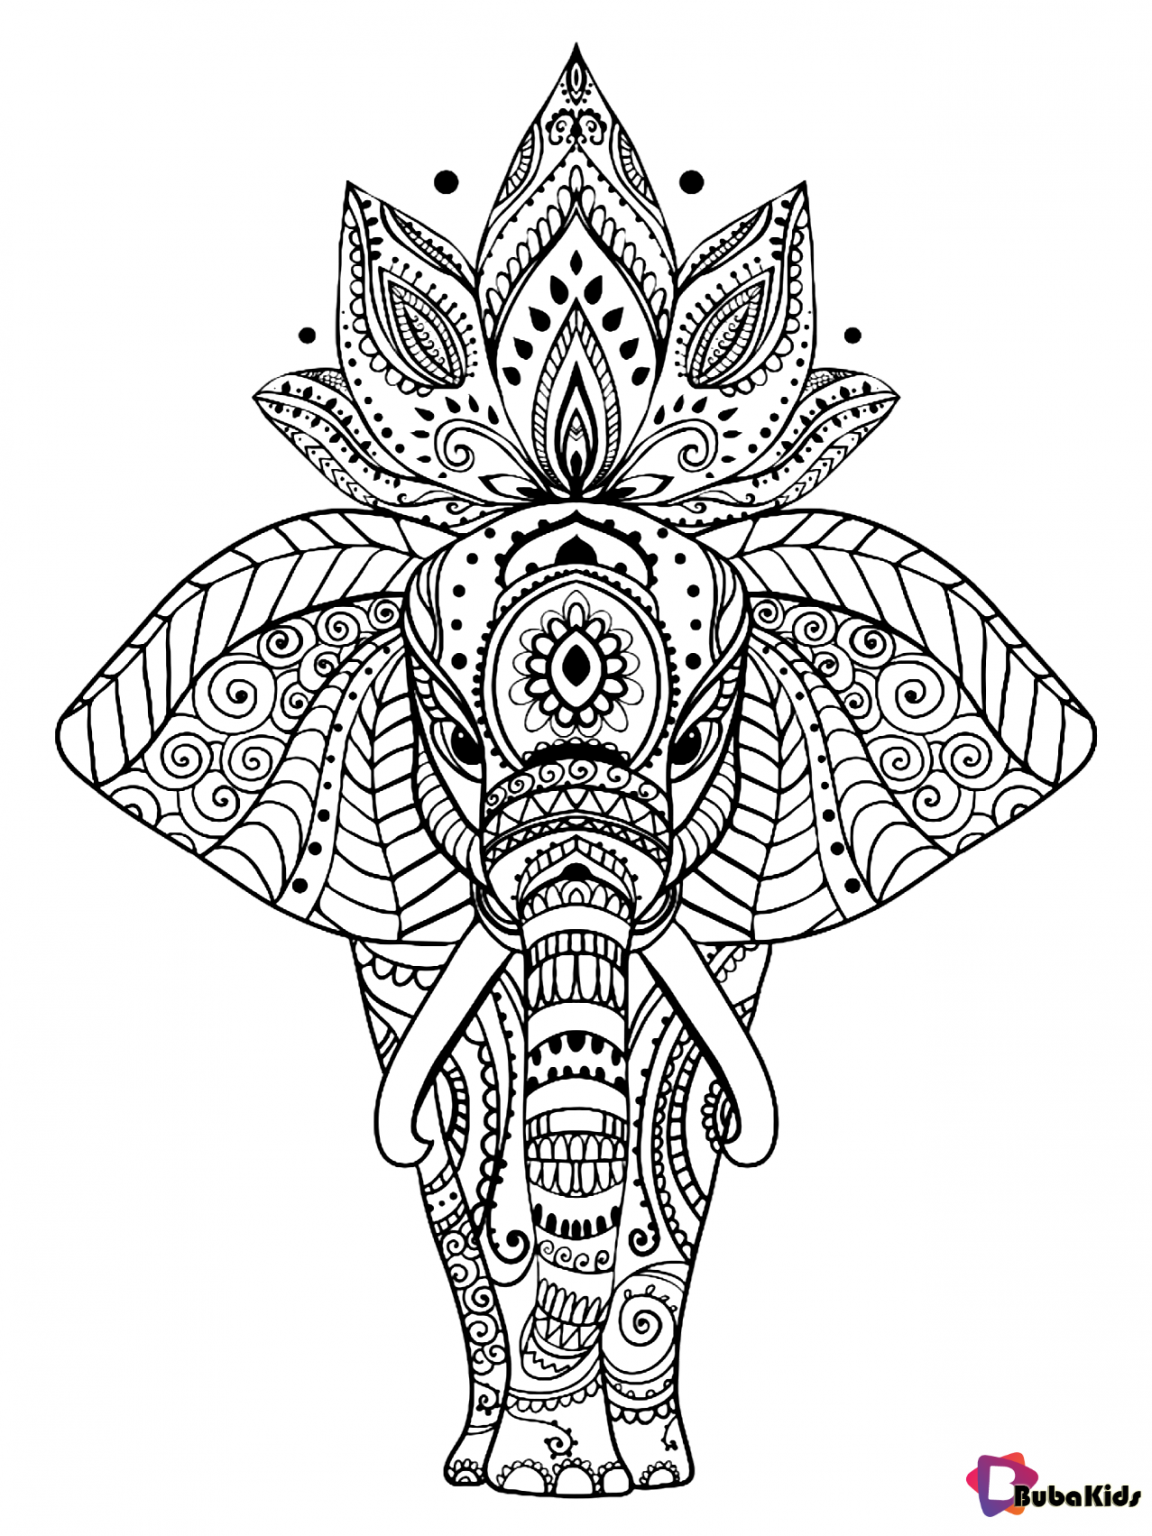 Animal elephant mandala coloring page for kids and adults - BubaKids.com